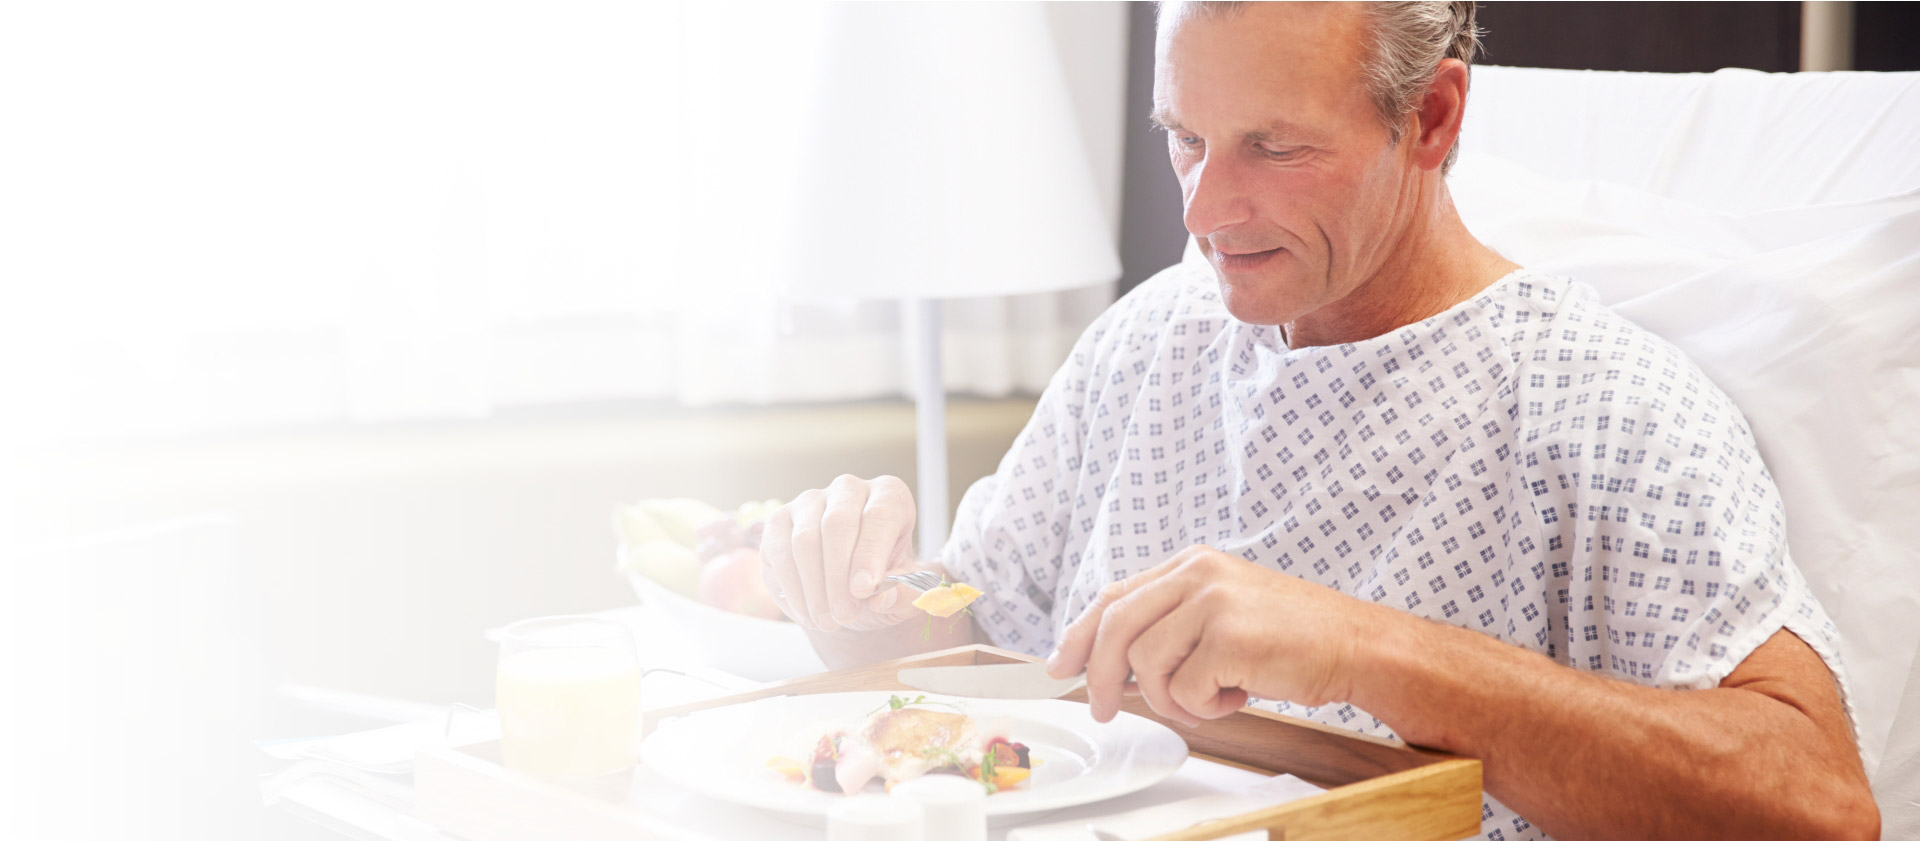 Man in hospital eating fresh food